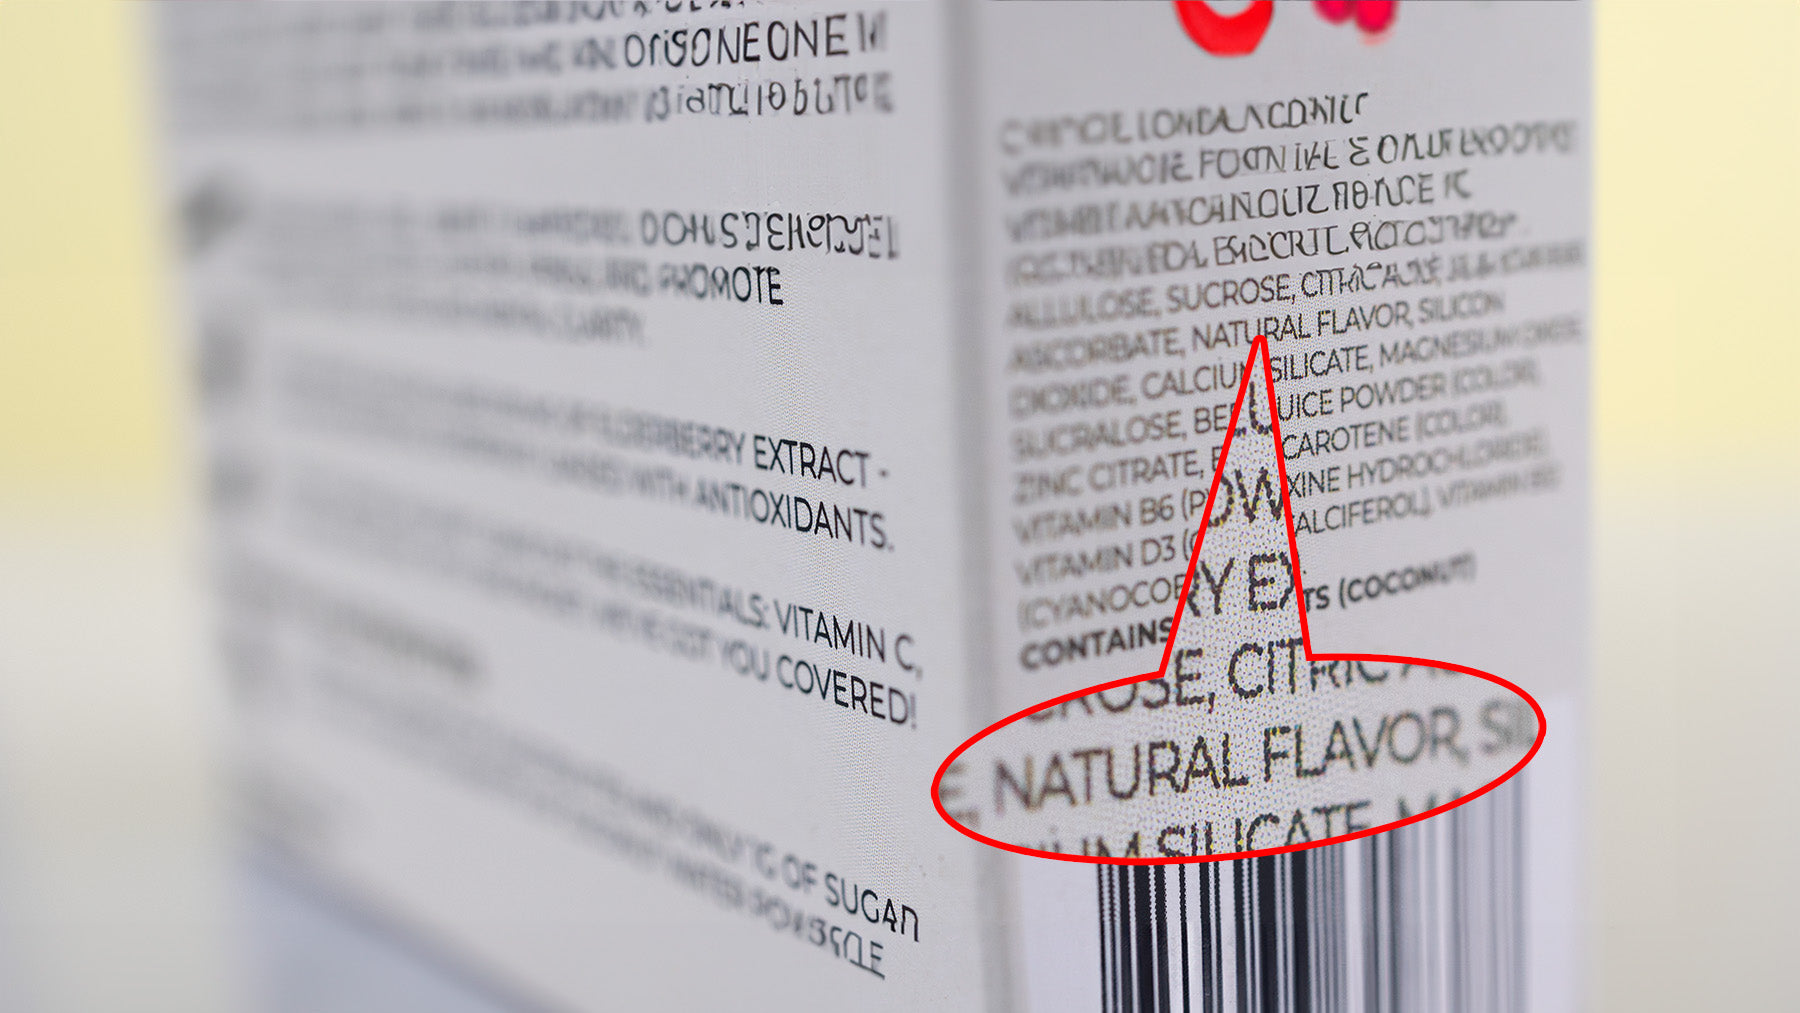 drink powder ingredient label with natural flavor